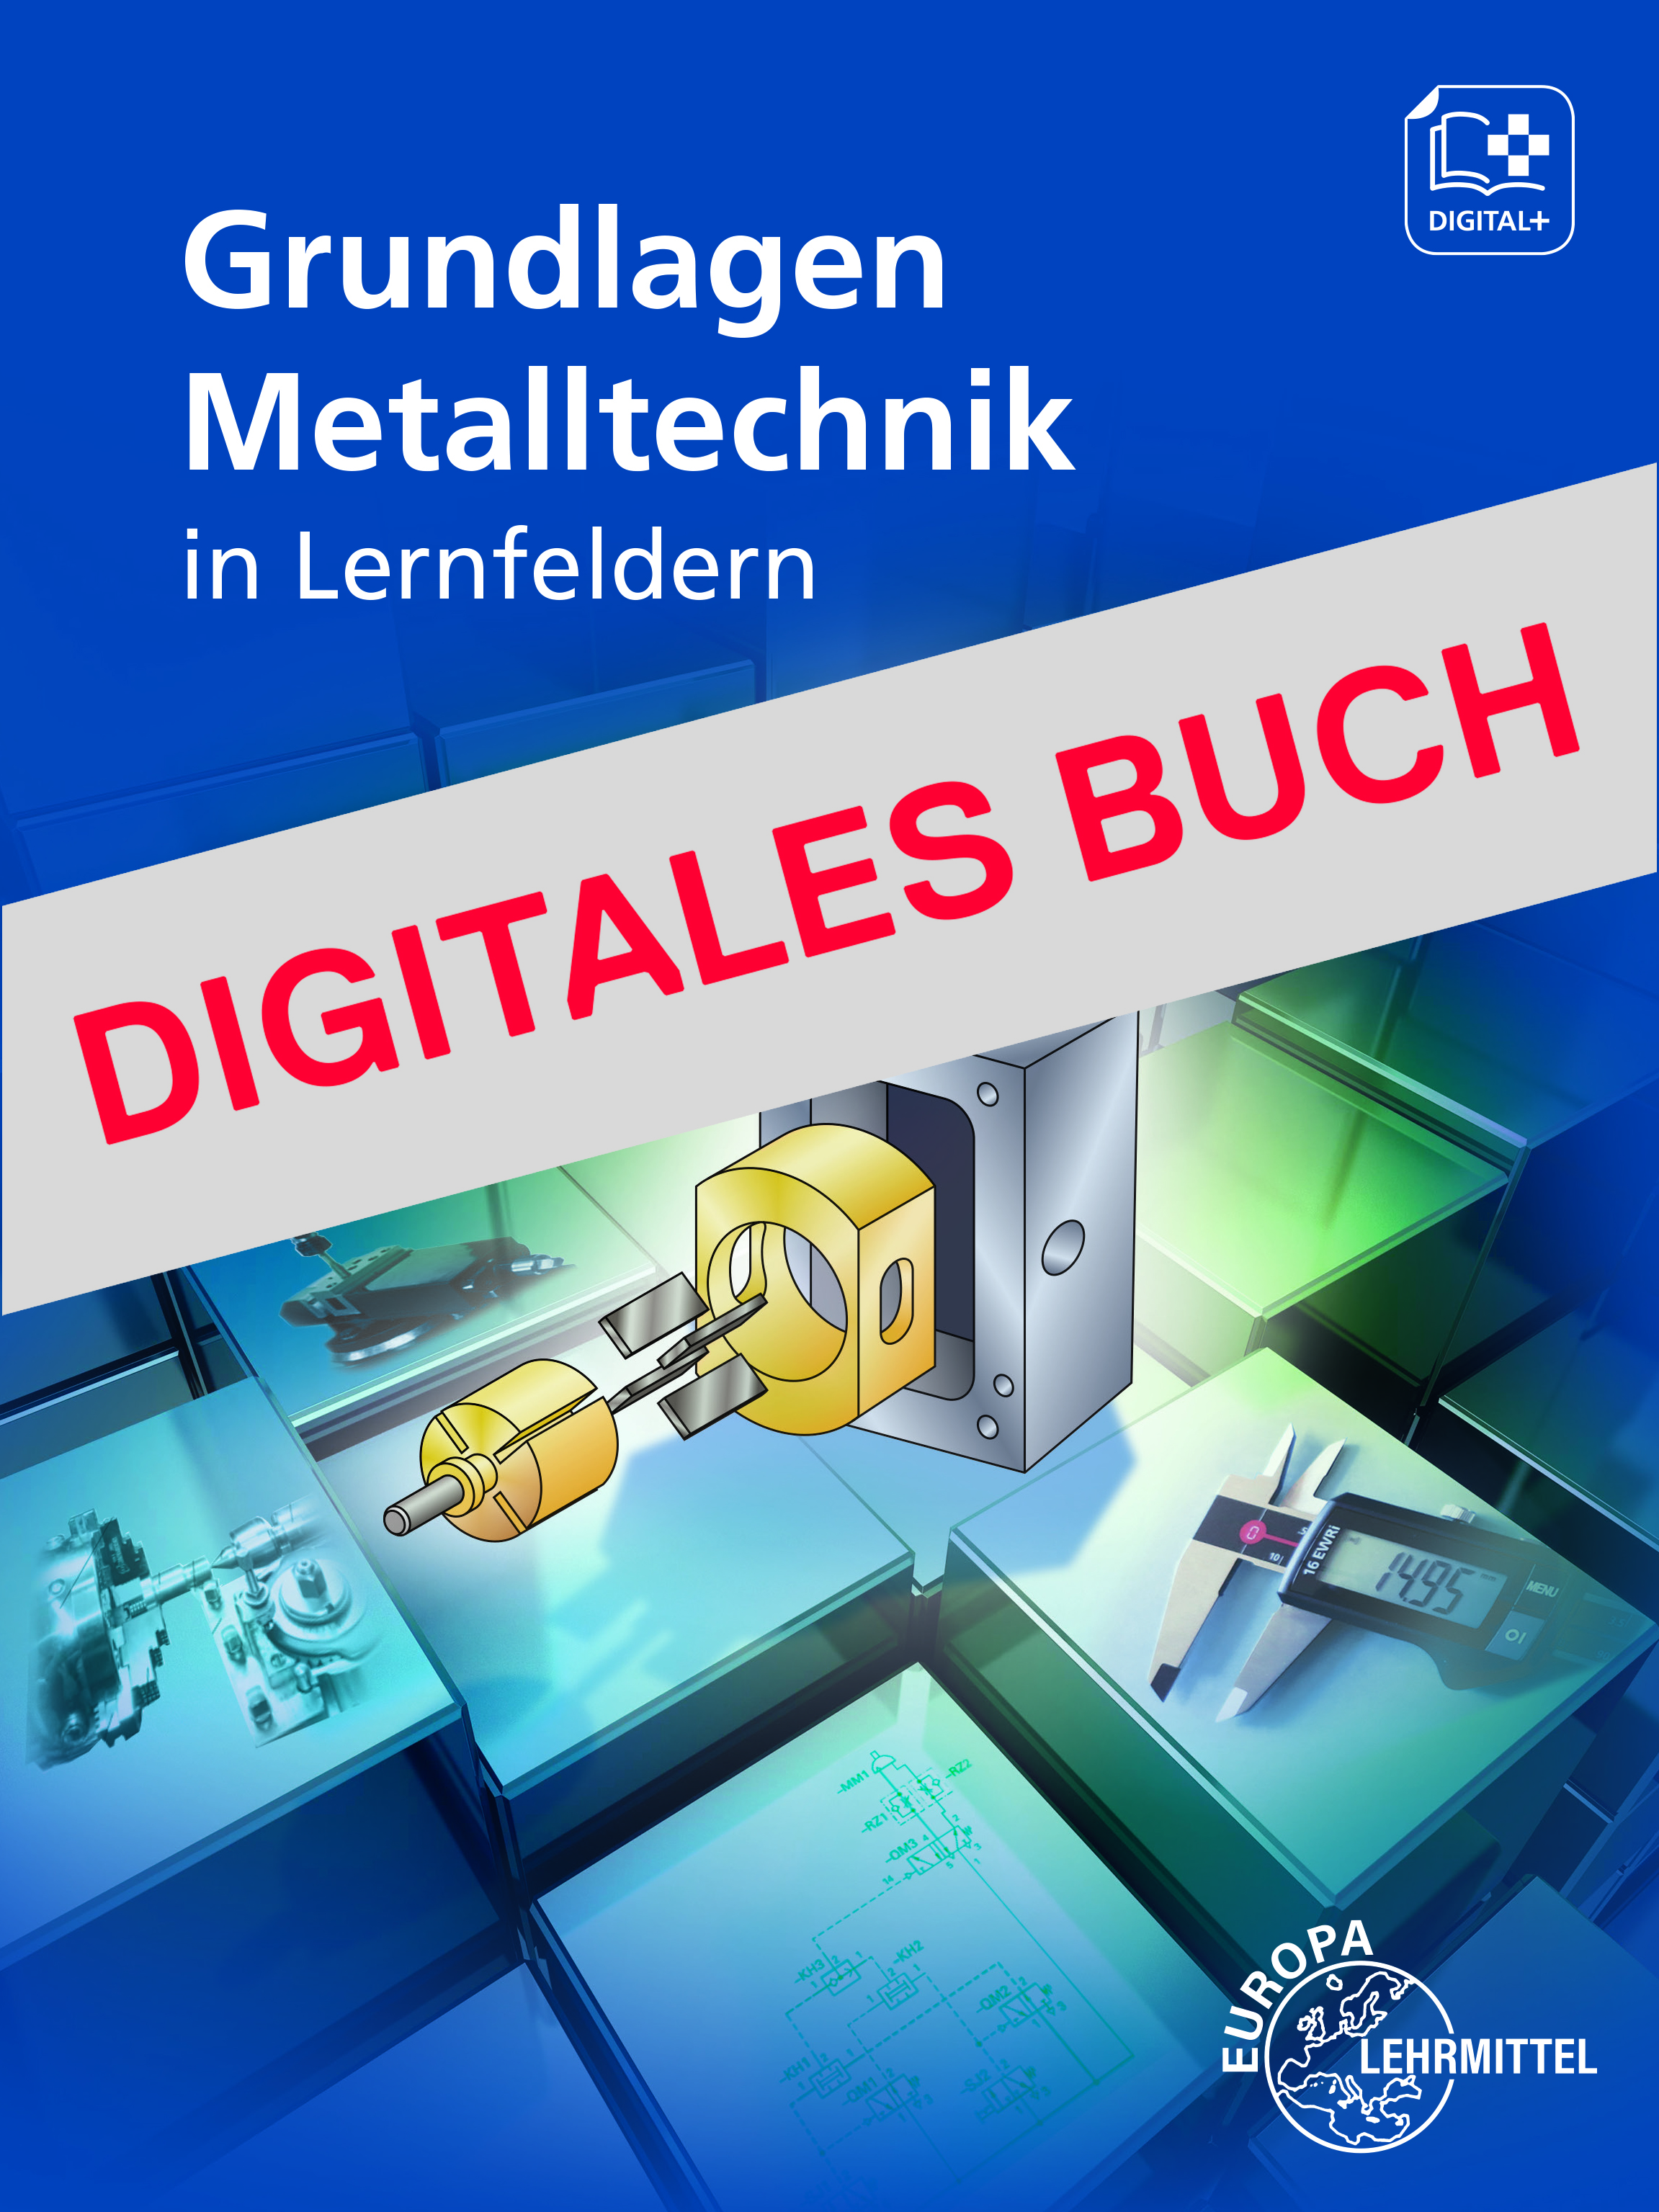 Grundlagen Metalltechnik in Lernfeldern - Digitales Buch